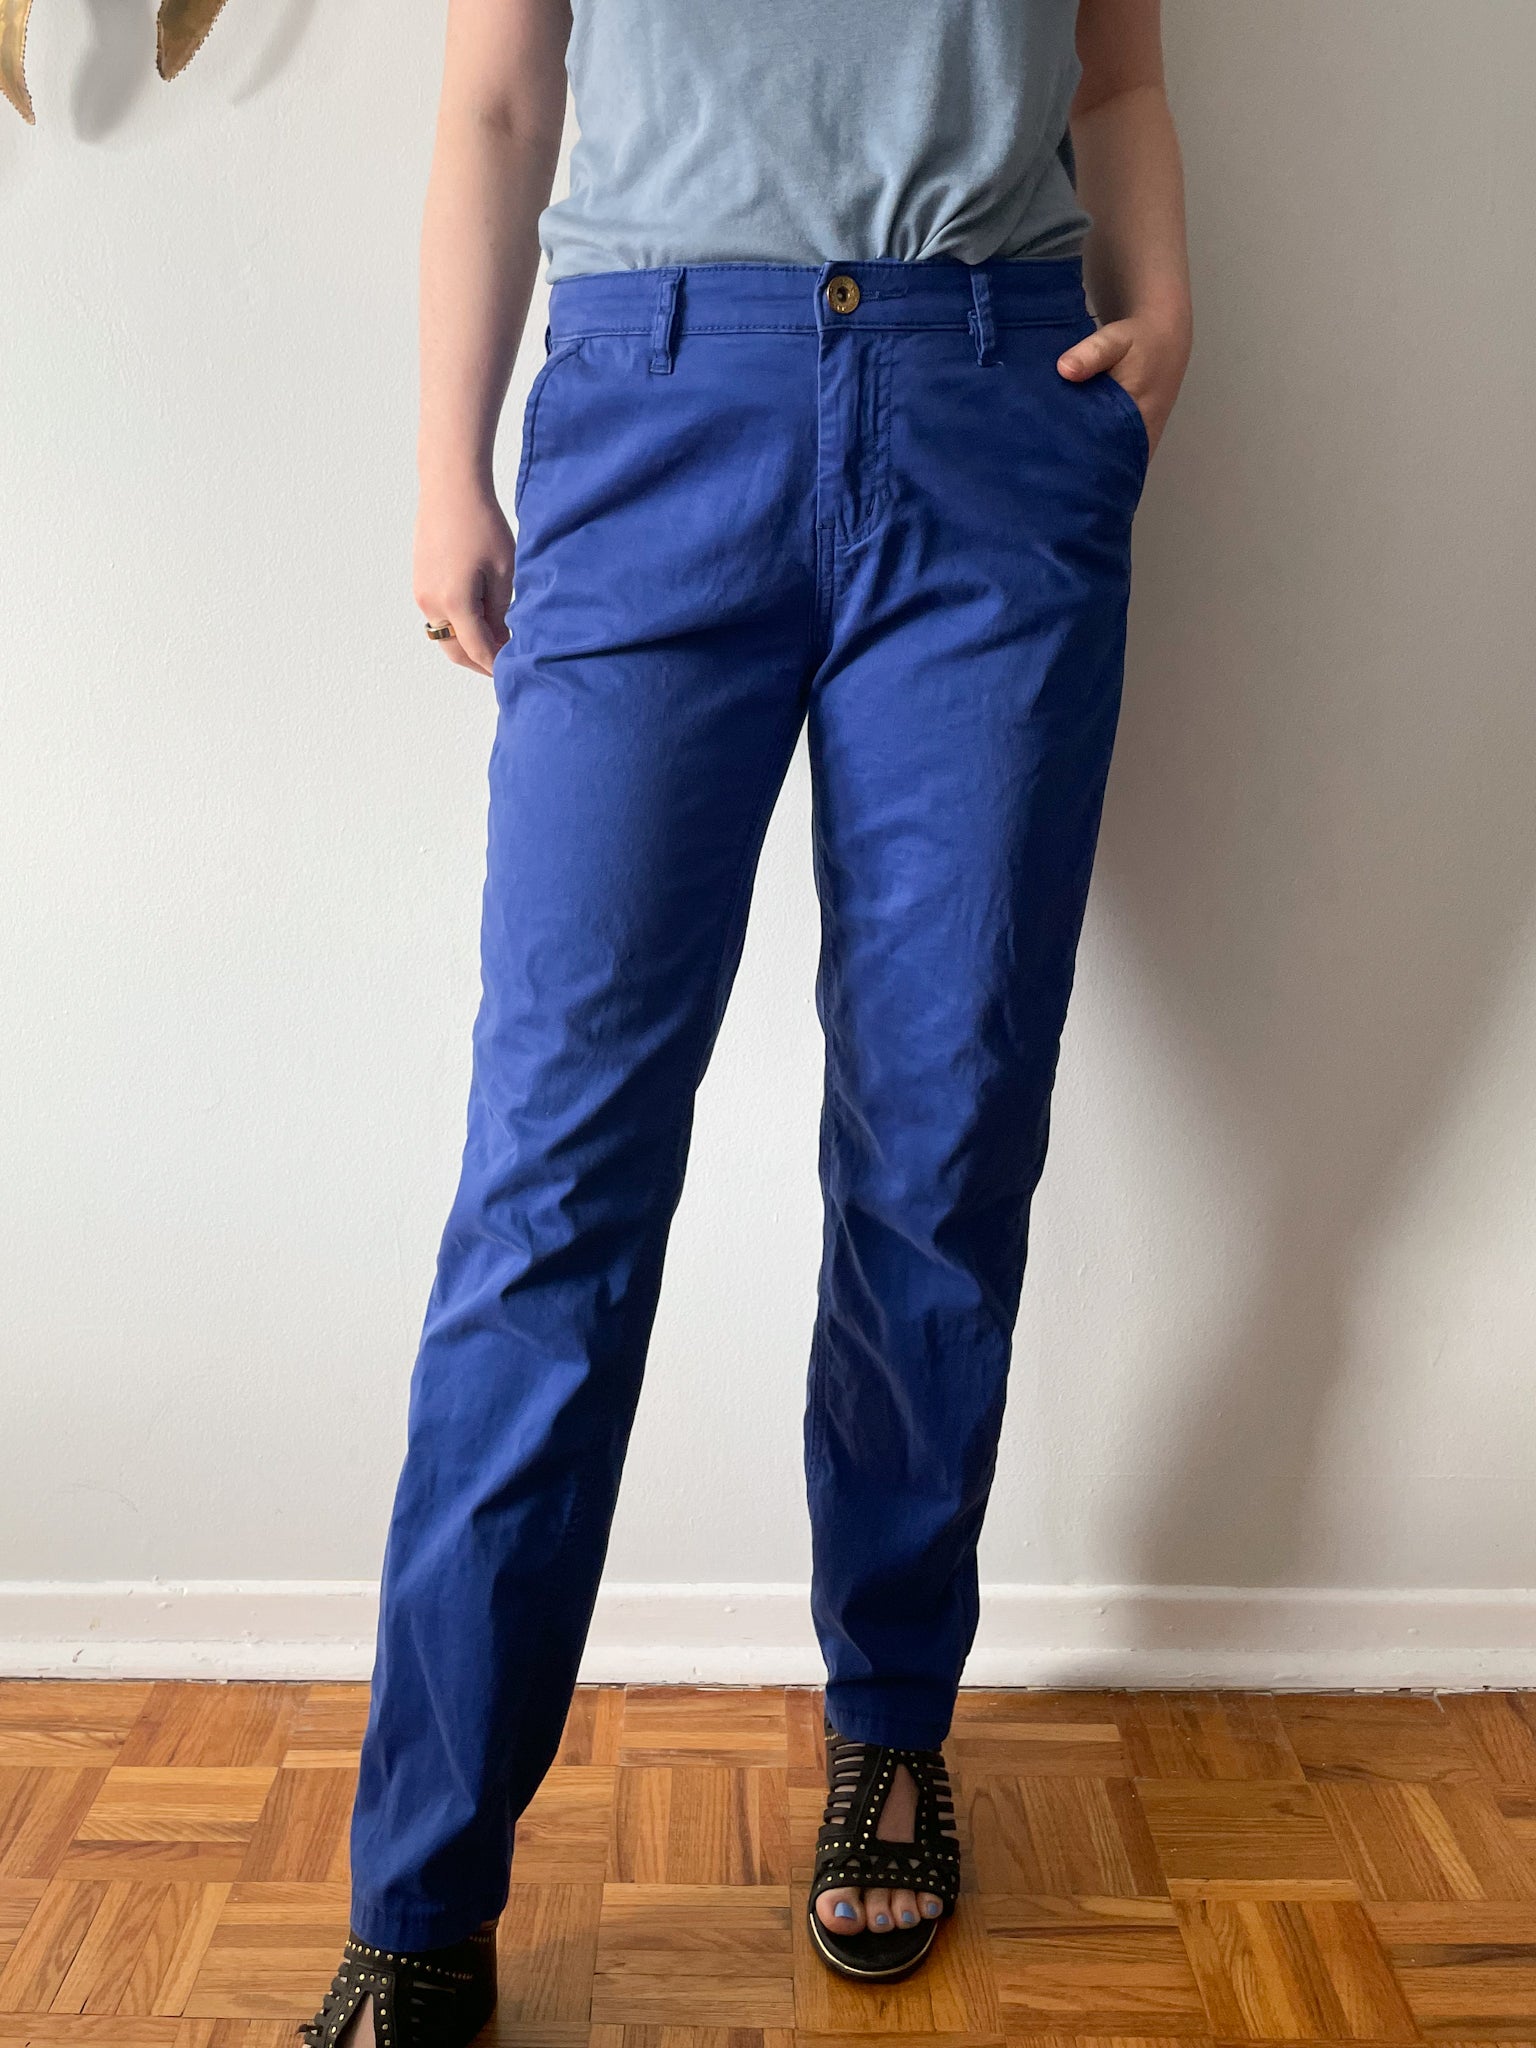 Women's Blue Pants, Royal & Navy Blue Pants